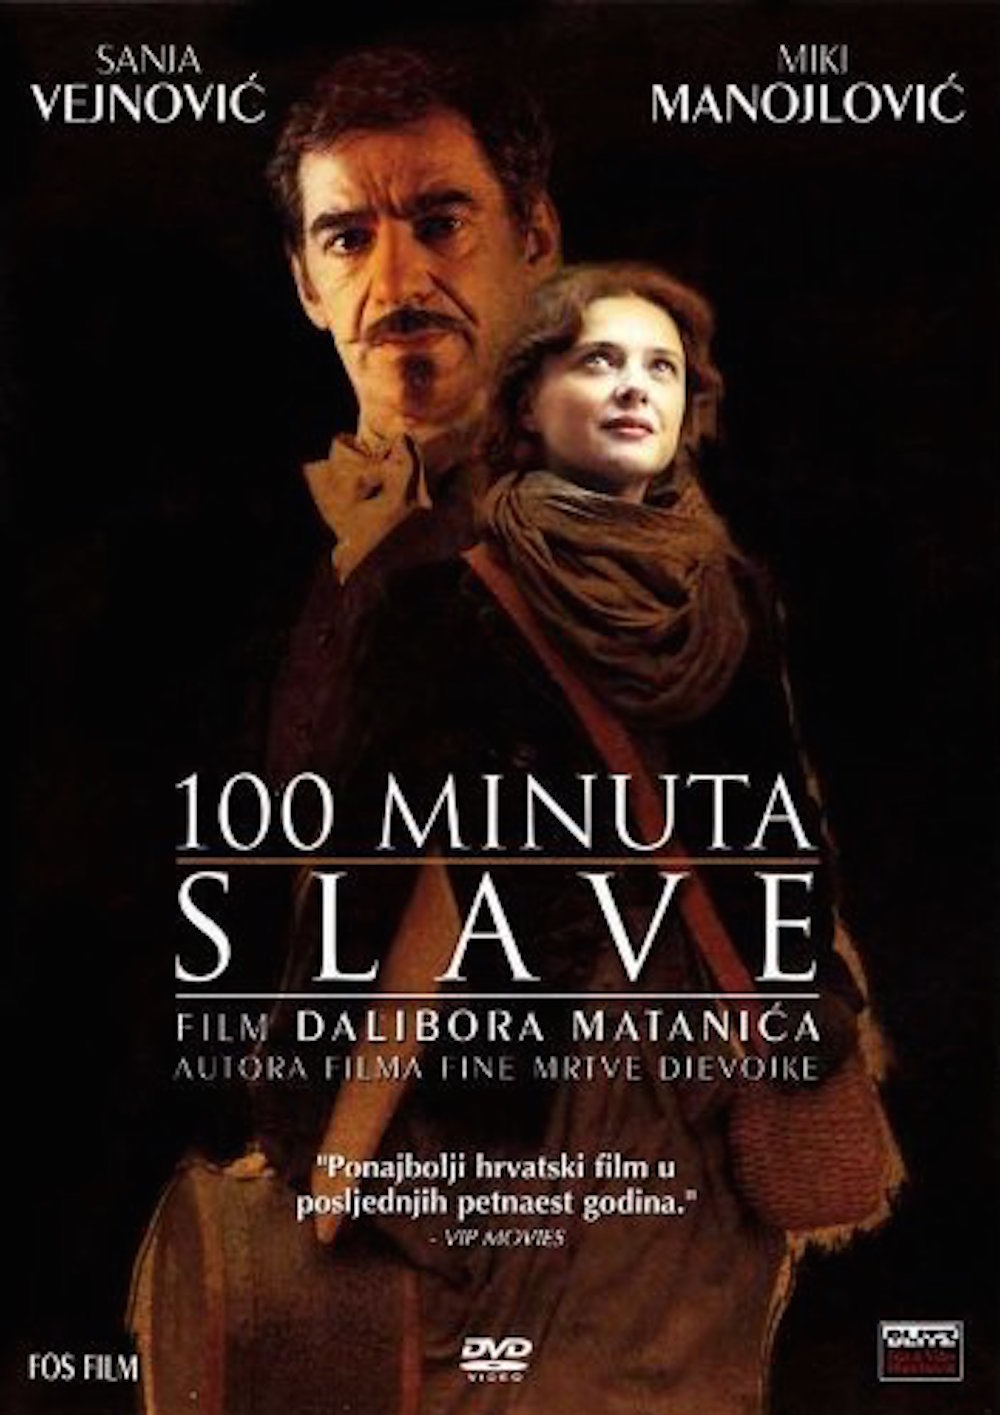 100 minuta slave (2004) Screenshot 1 